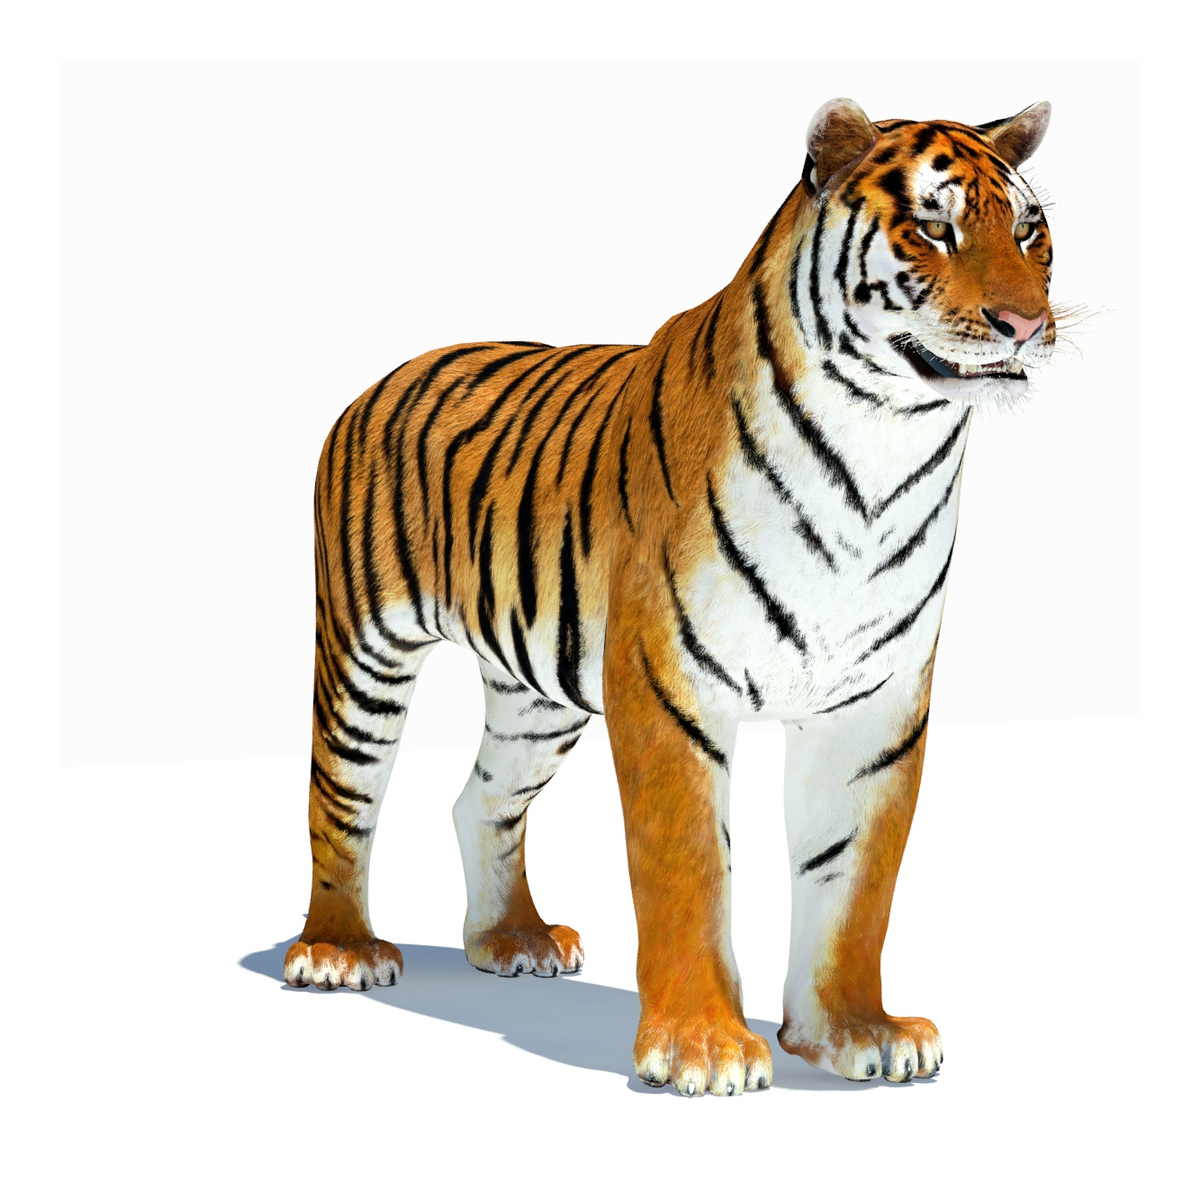 Photo Tigers Big cats 3D Graphics Roar Snout animal 3825x2550